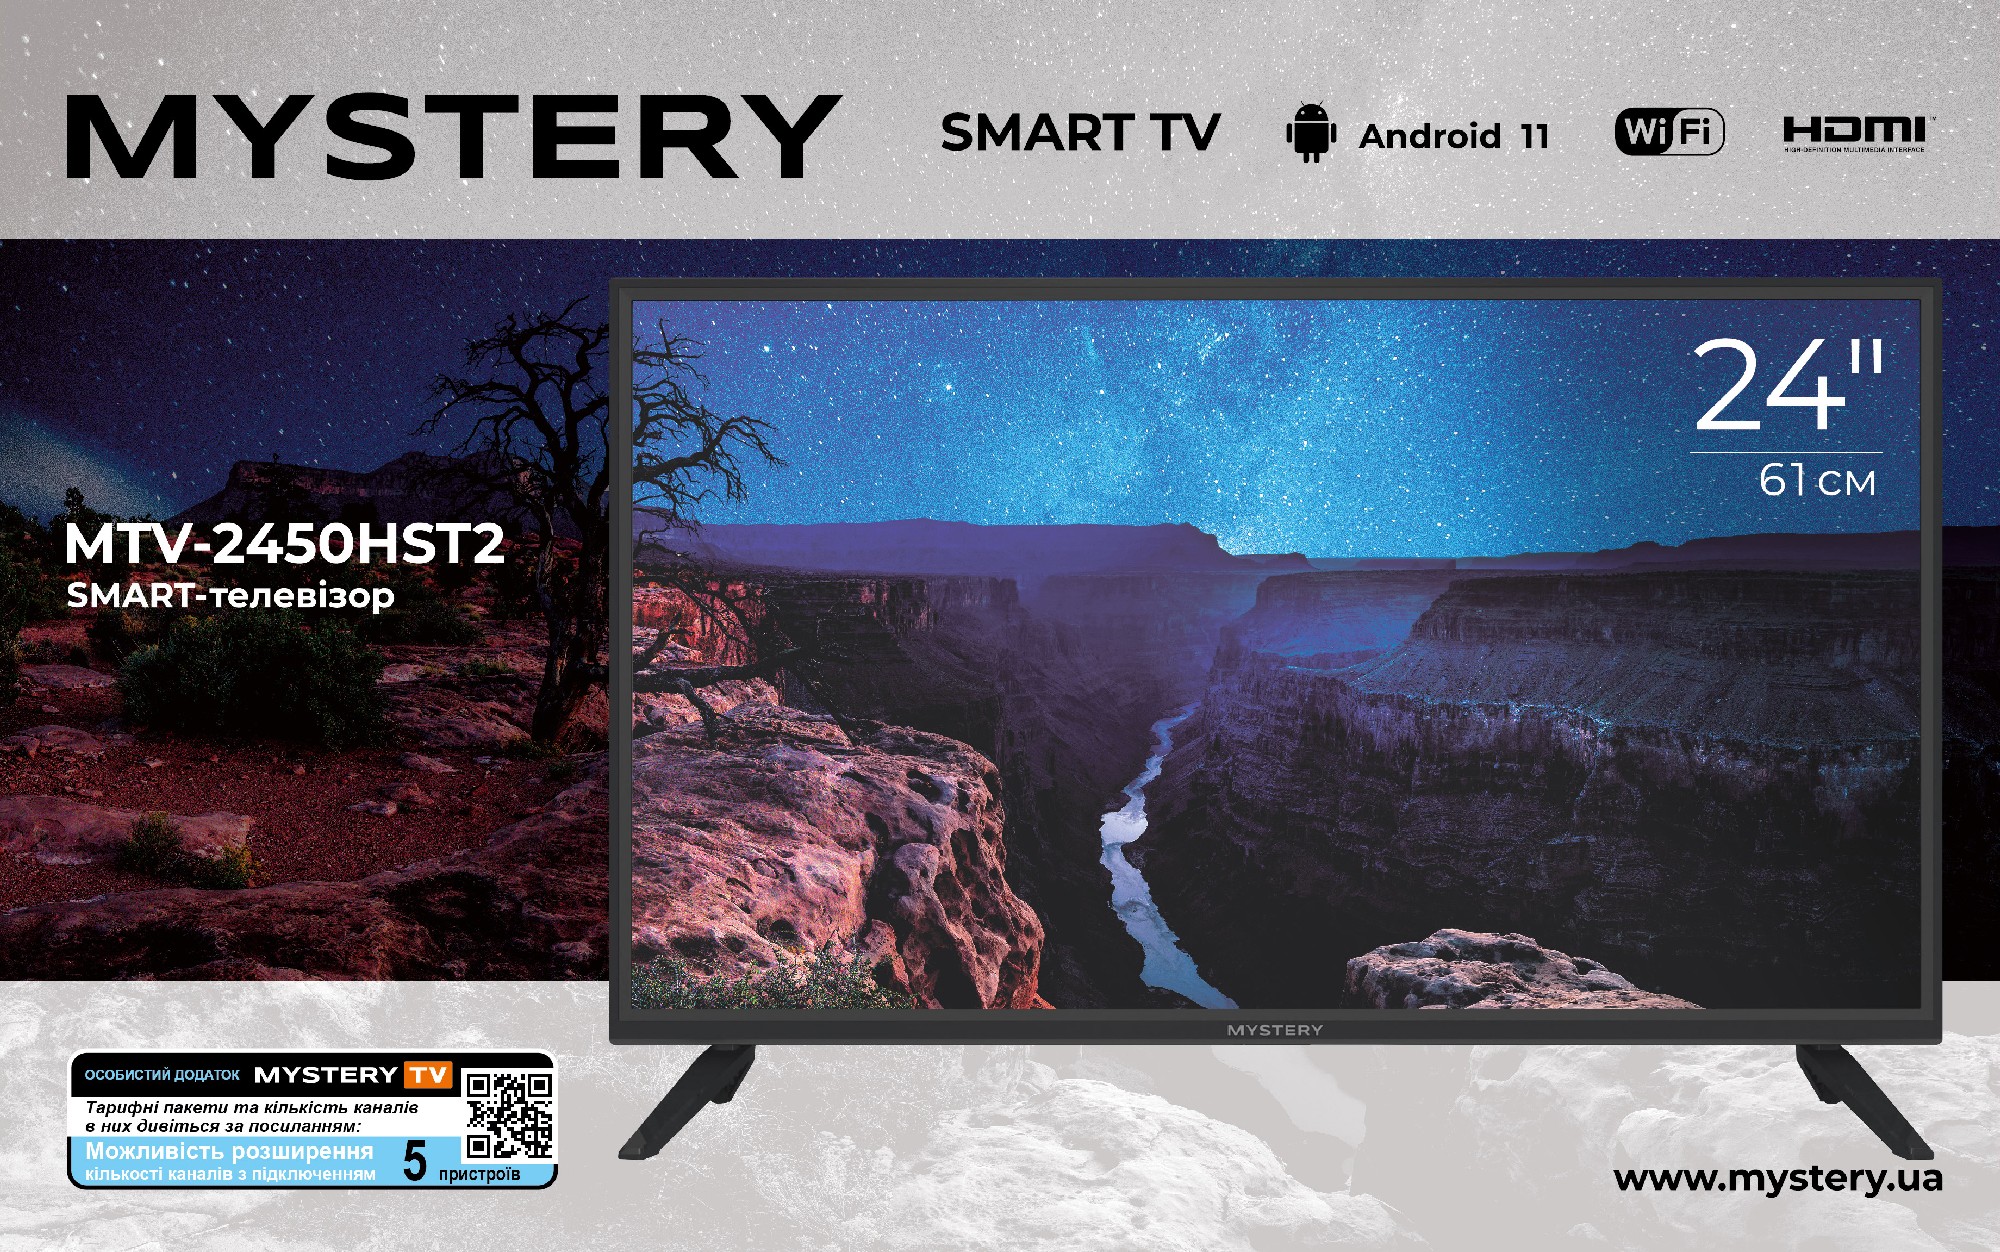 Mystery MTV-2450HST2 Smart TV